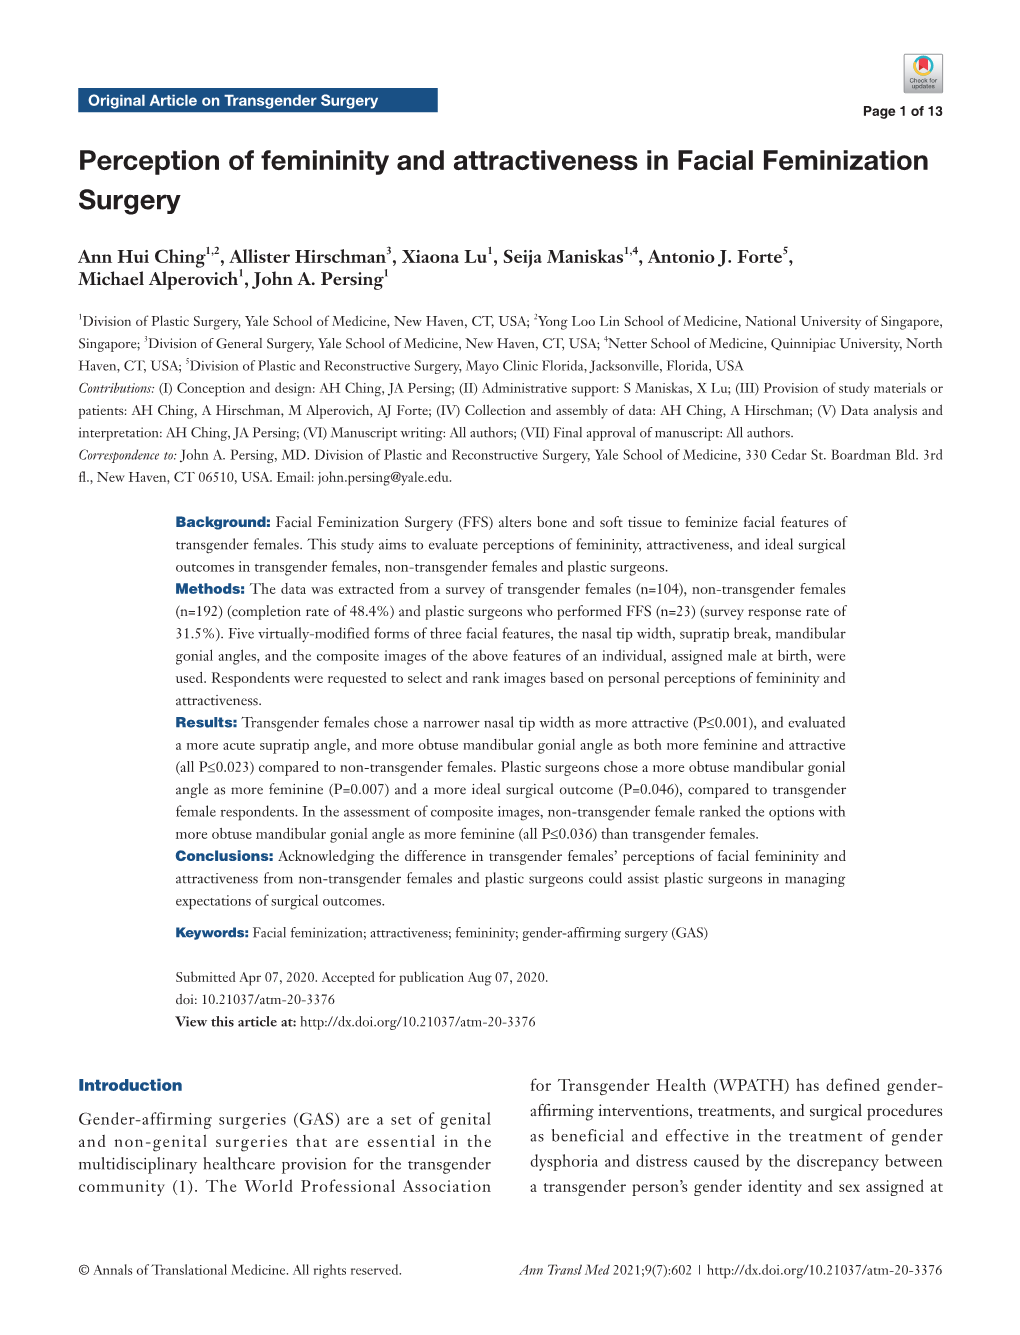 Perception of Femininity and Attractiveness in Facial Feminization Surgery